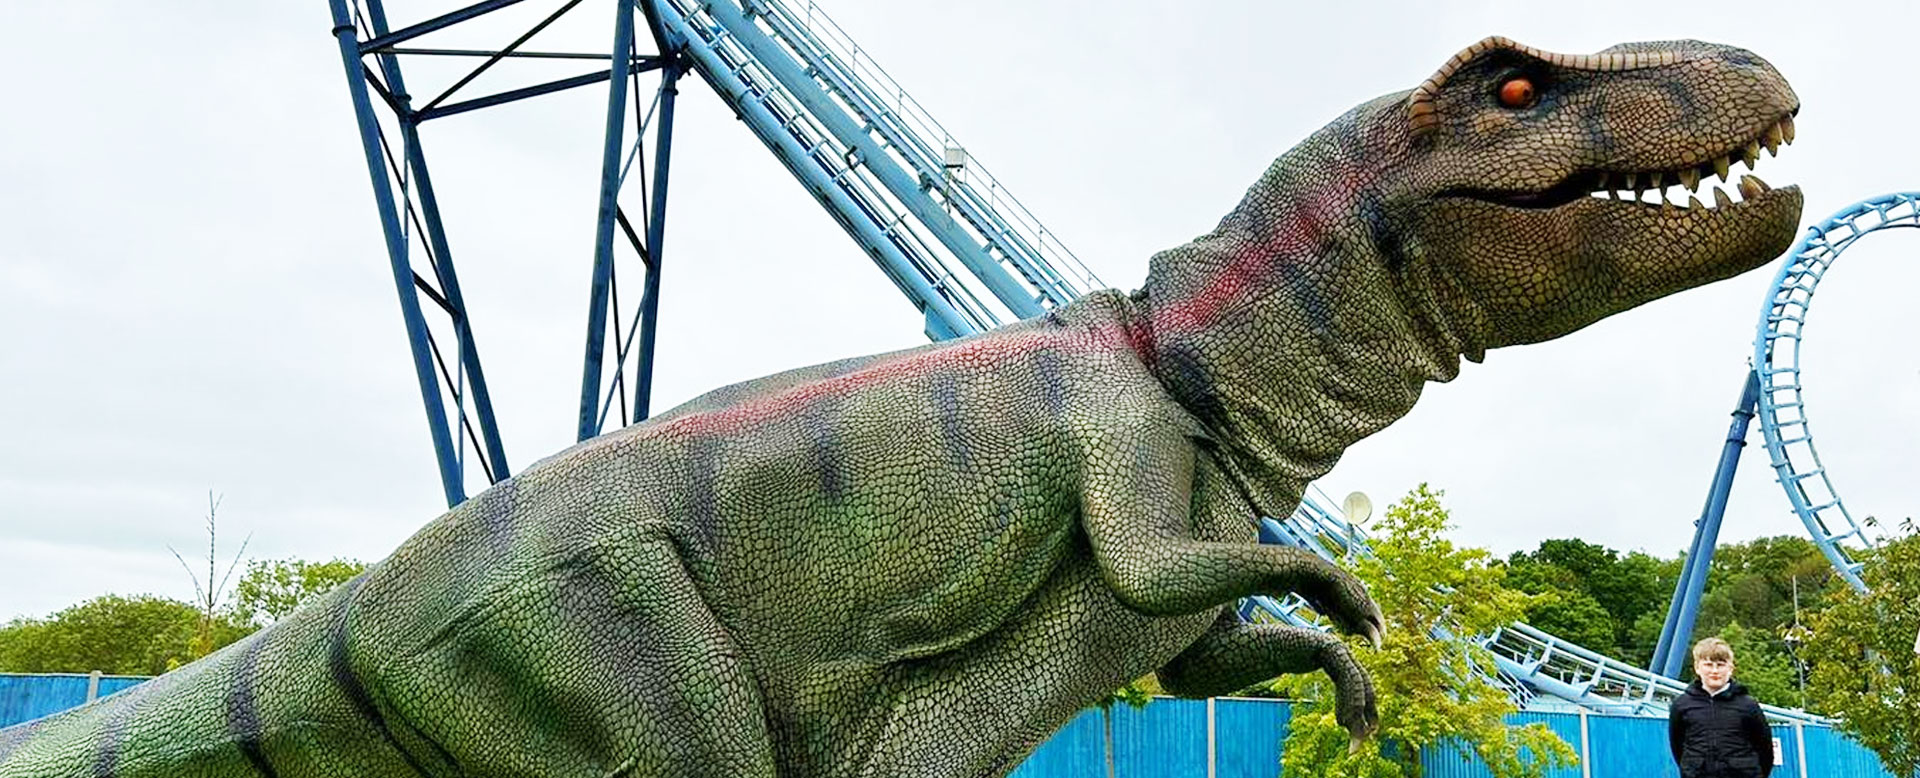 T-Rex dinosaur near Wipeout rollercoaster Pleasurewood Hills theme park